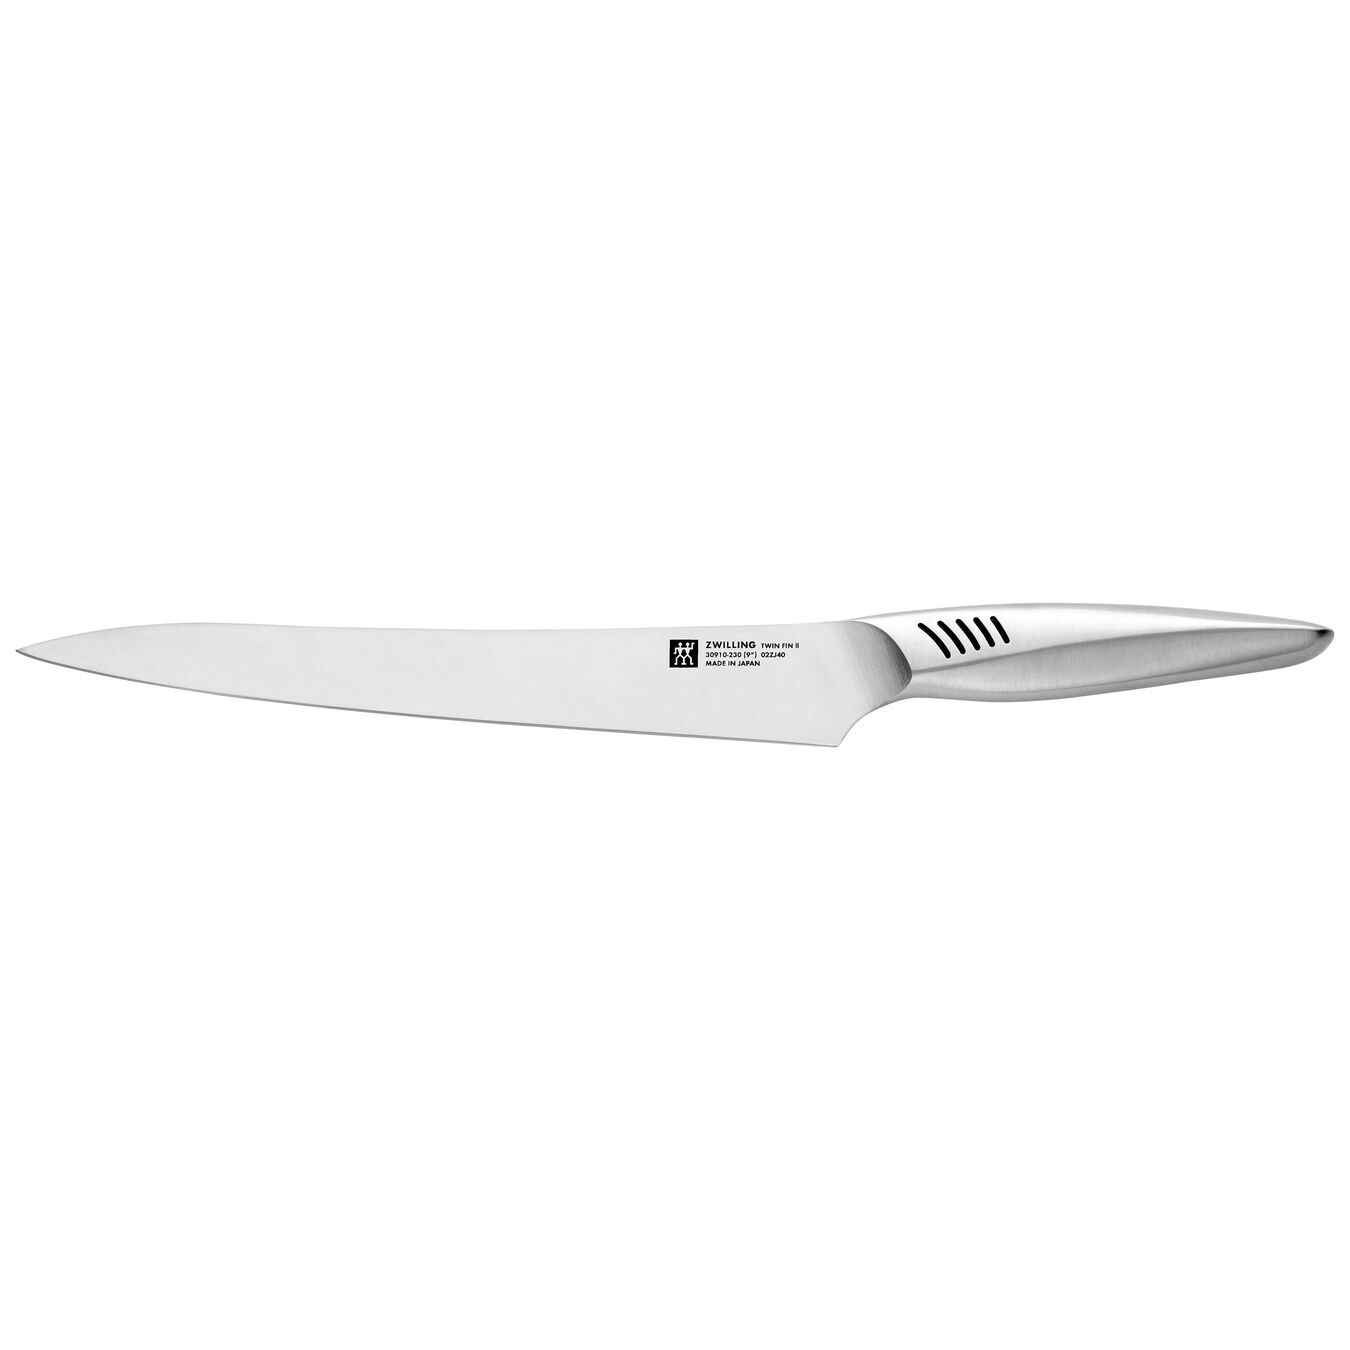 Cuchillo fileteador 23 cm, Acero inoxidable,,large 1